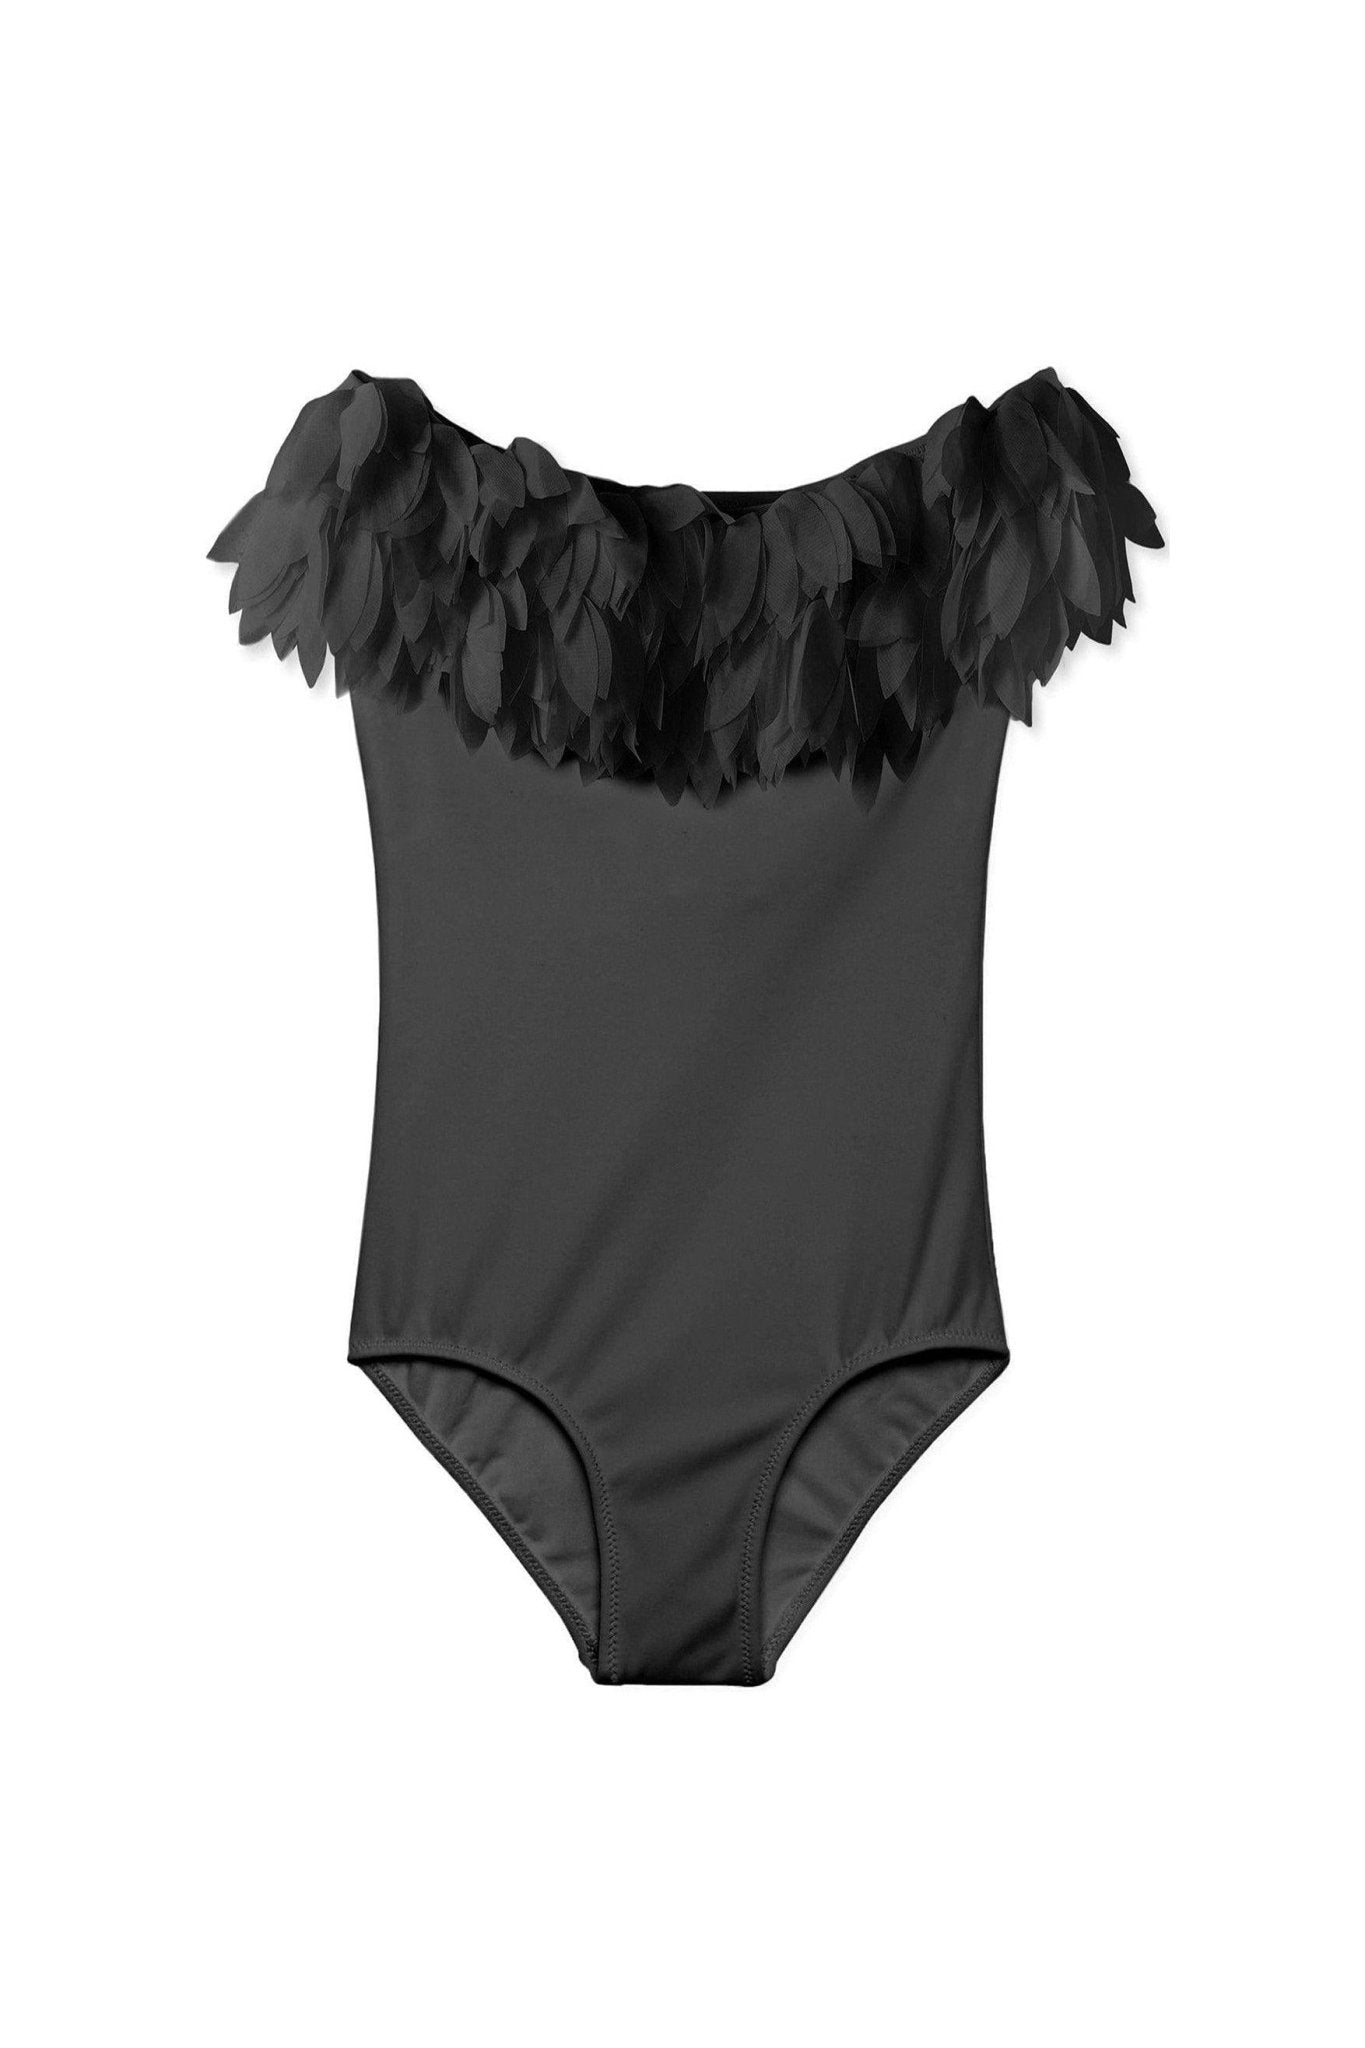 Black Draped Swimsuit with Black Petals - Mack & Harvie